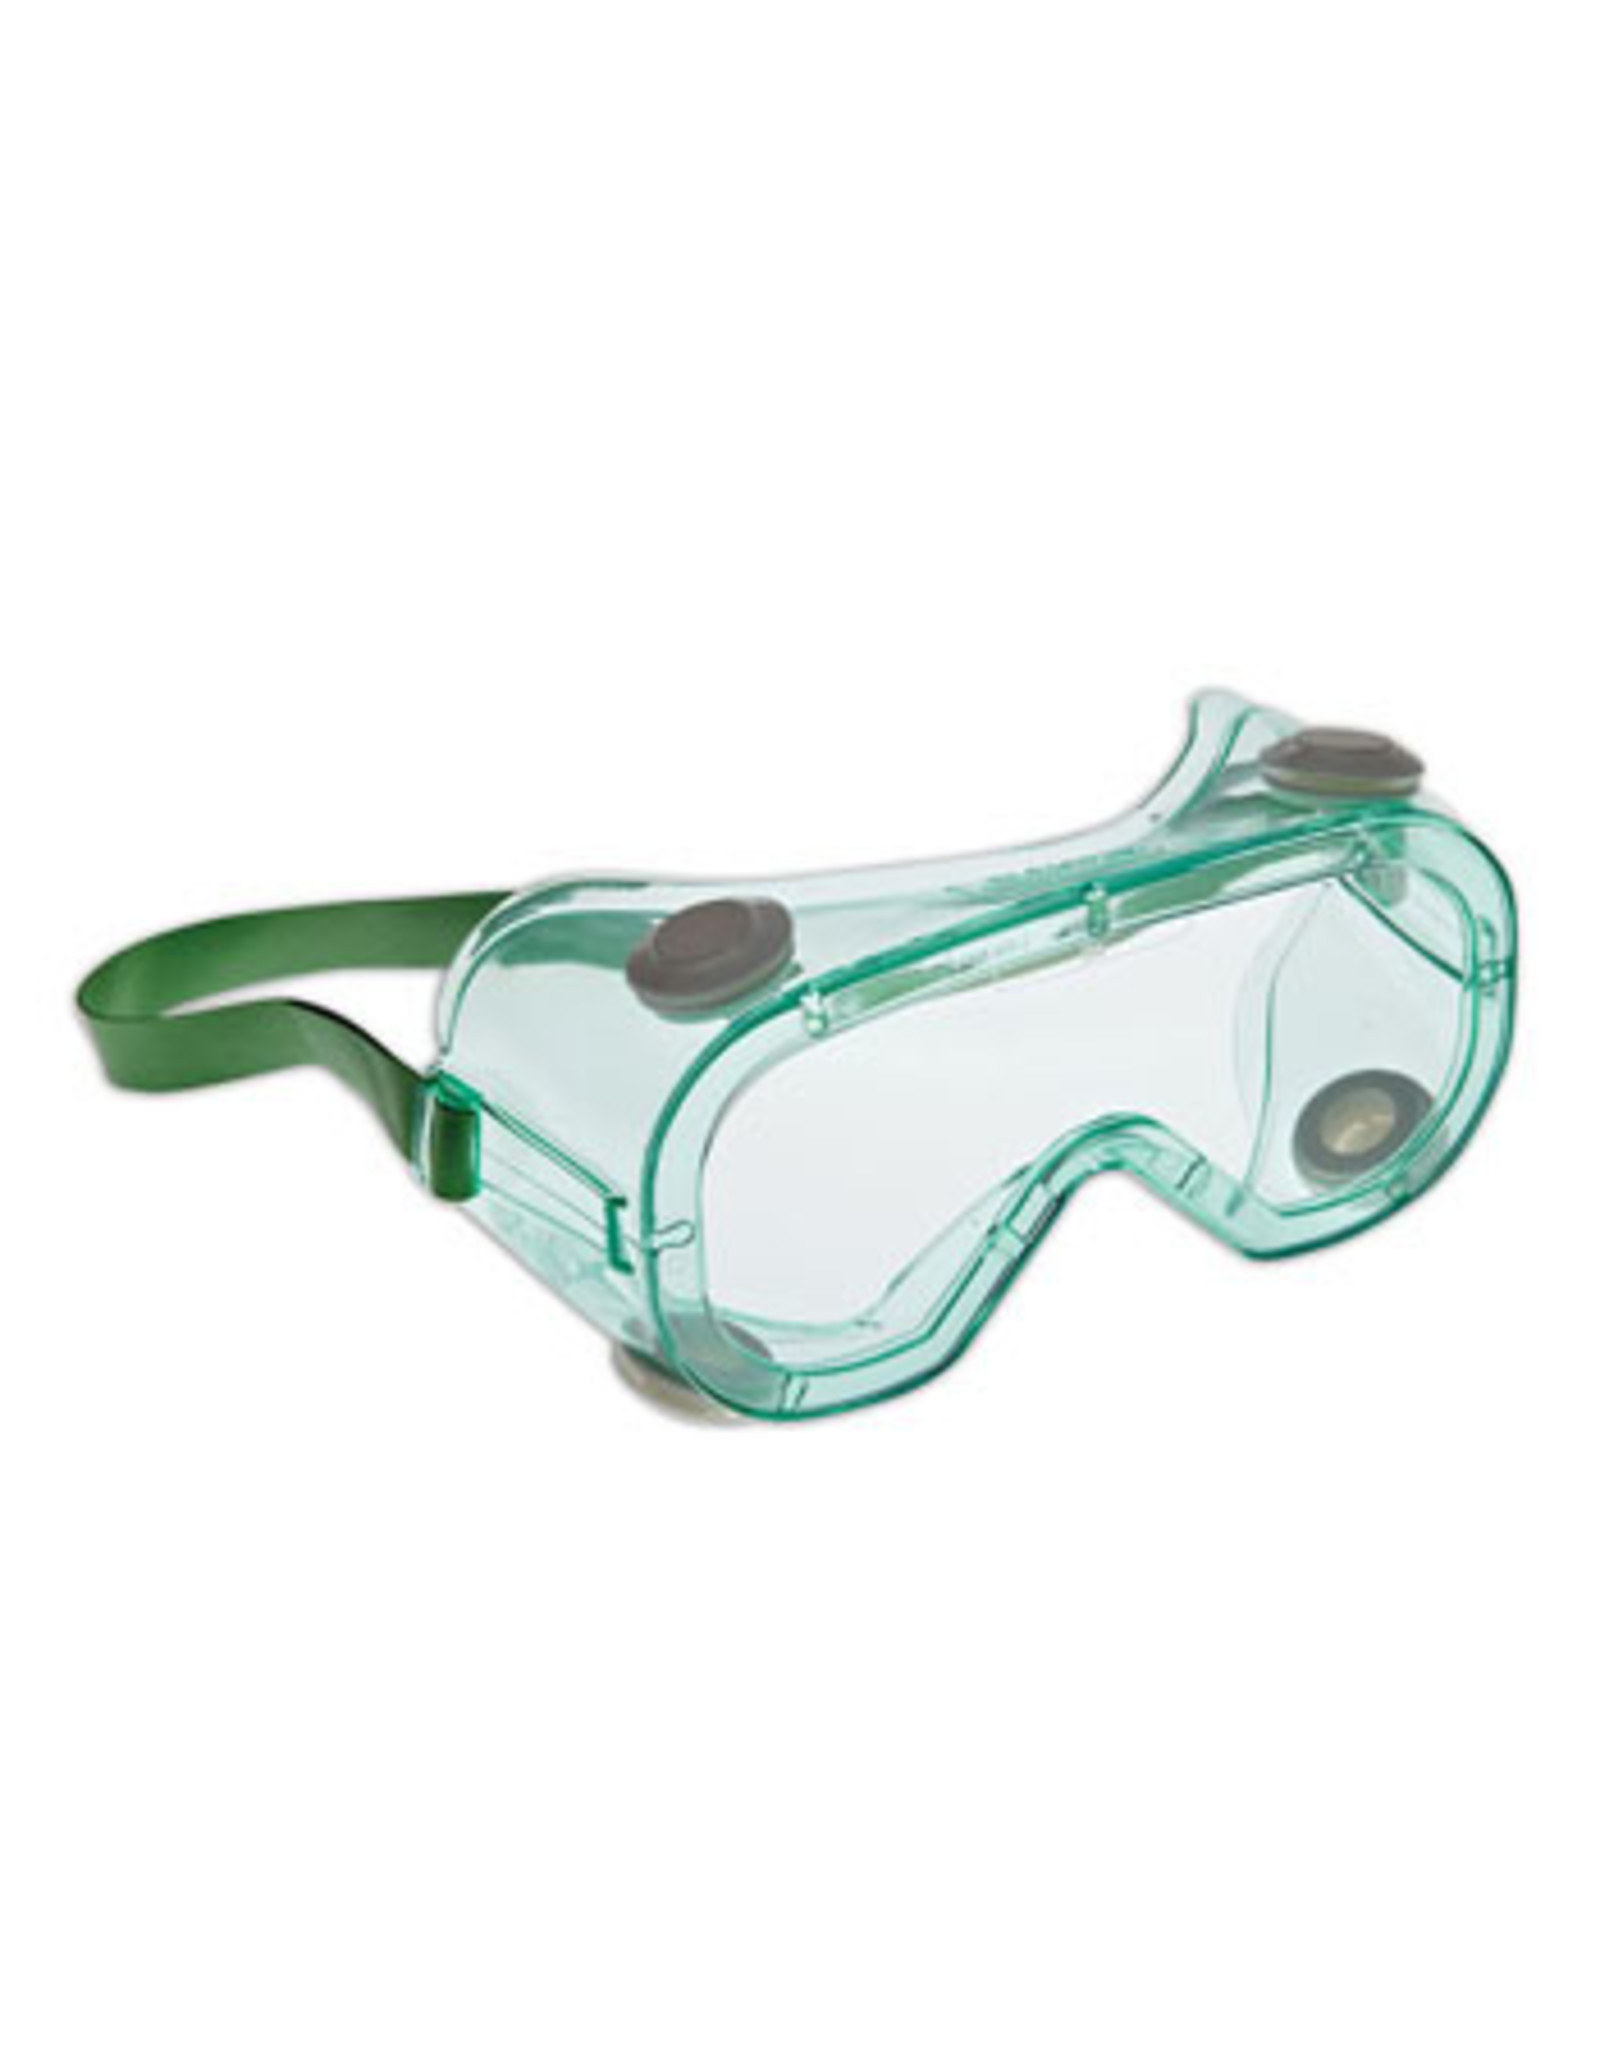 Chem Pro Goggle  Indirect vented, Fog Free lens,  Neoprene Headband